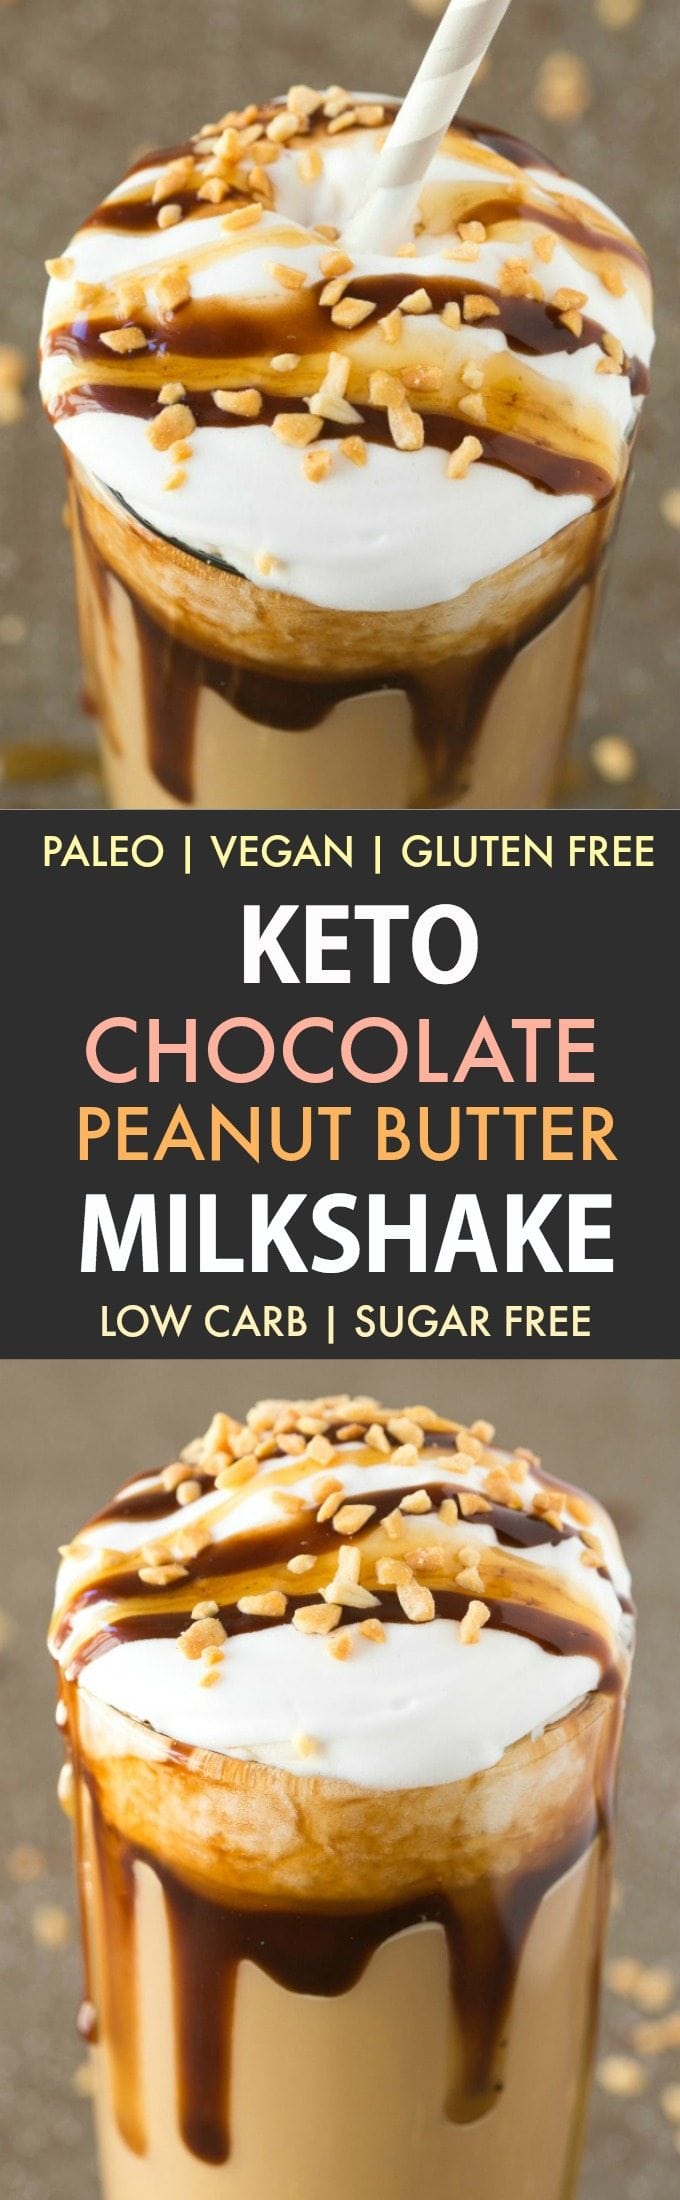 Keto Chocolate Peanut Butter Milkshake (Dairy Free, Paleo, Vegan, Gluten Free)- Insanely thick and creamy chocolate peanut butter milkshake which tastes like snickers! It's low carb and sugar free too! {v, gf, p recipe}- #keto #ketobreakfast #lowcarb #smoothie #dairyfreemilkshake | Recipe on thebigmansworld.com